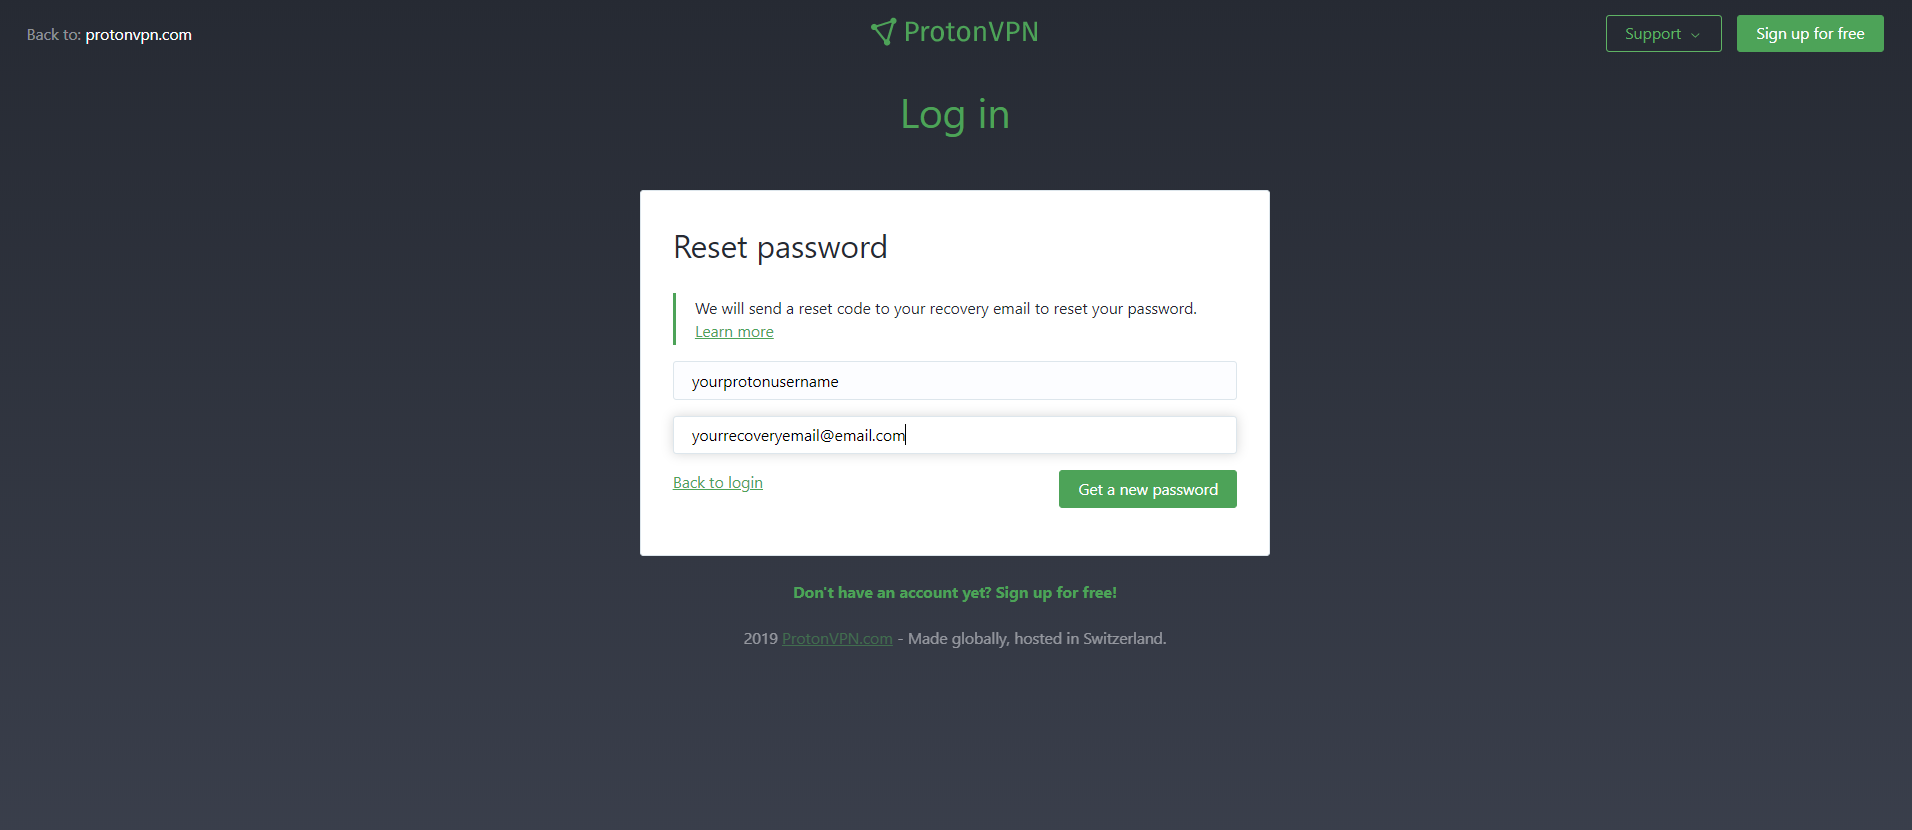 protonvpn free login